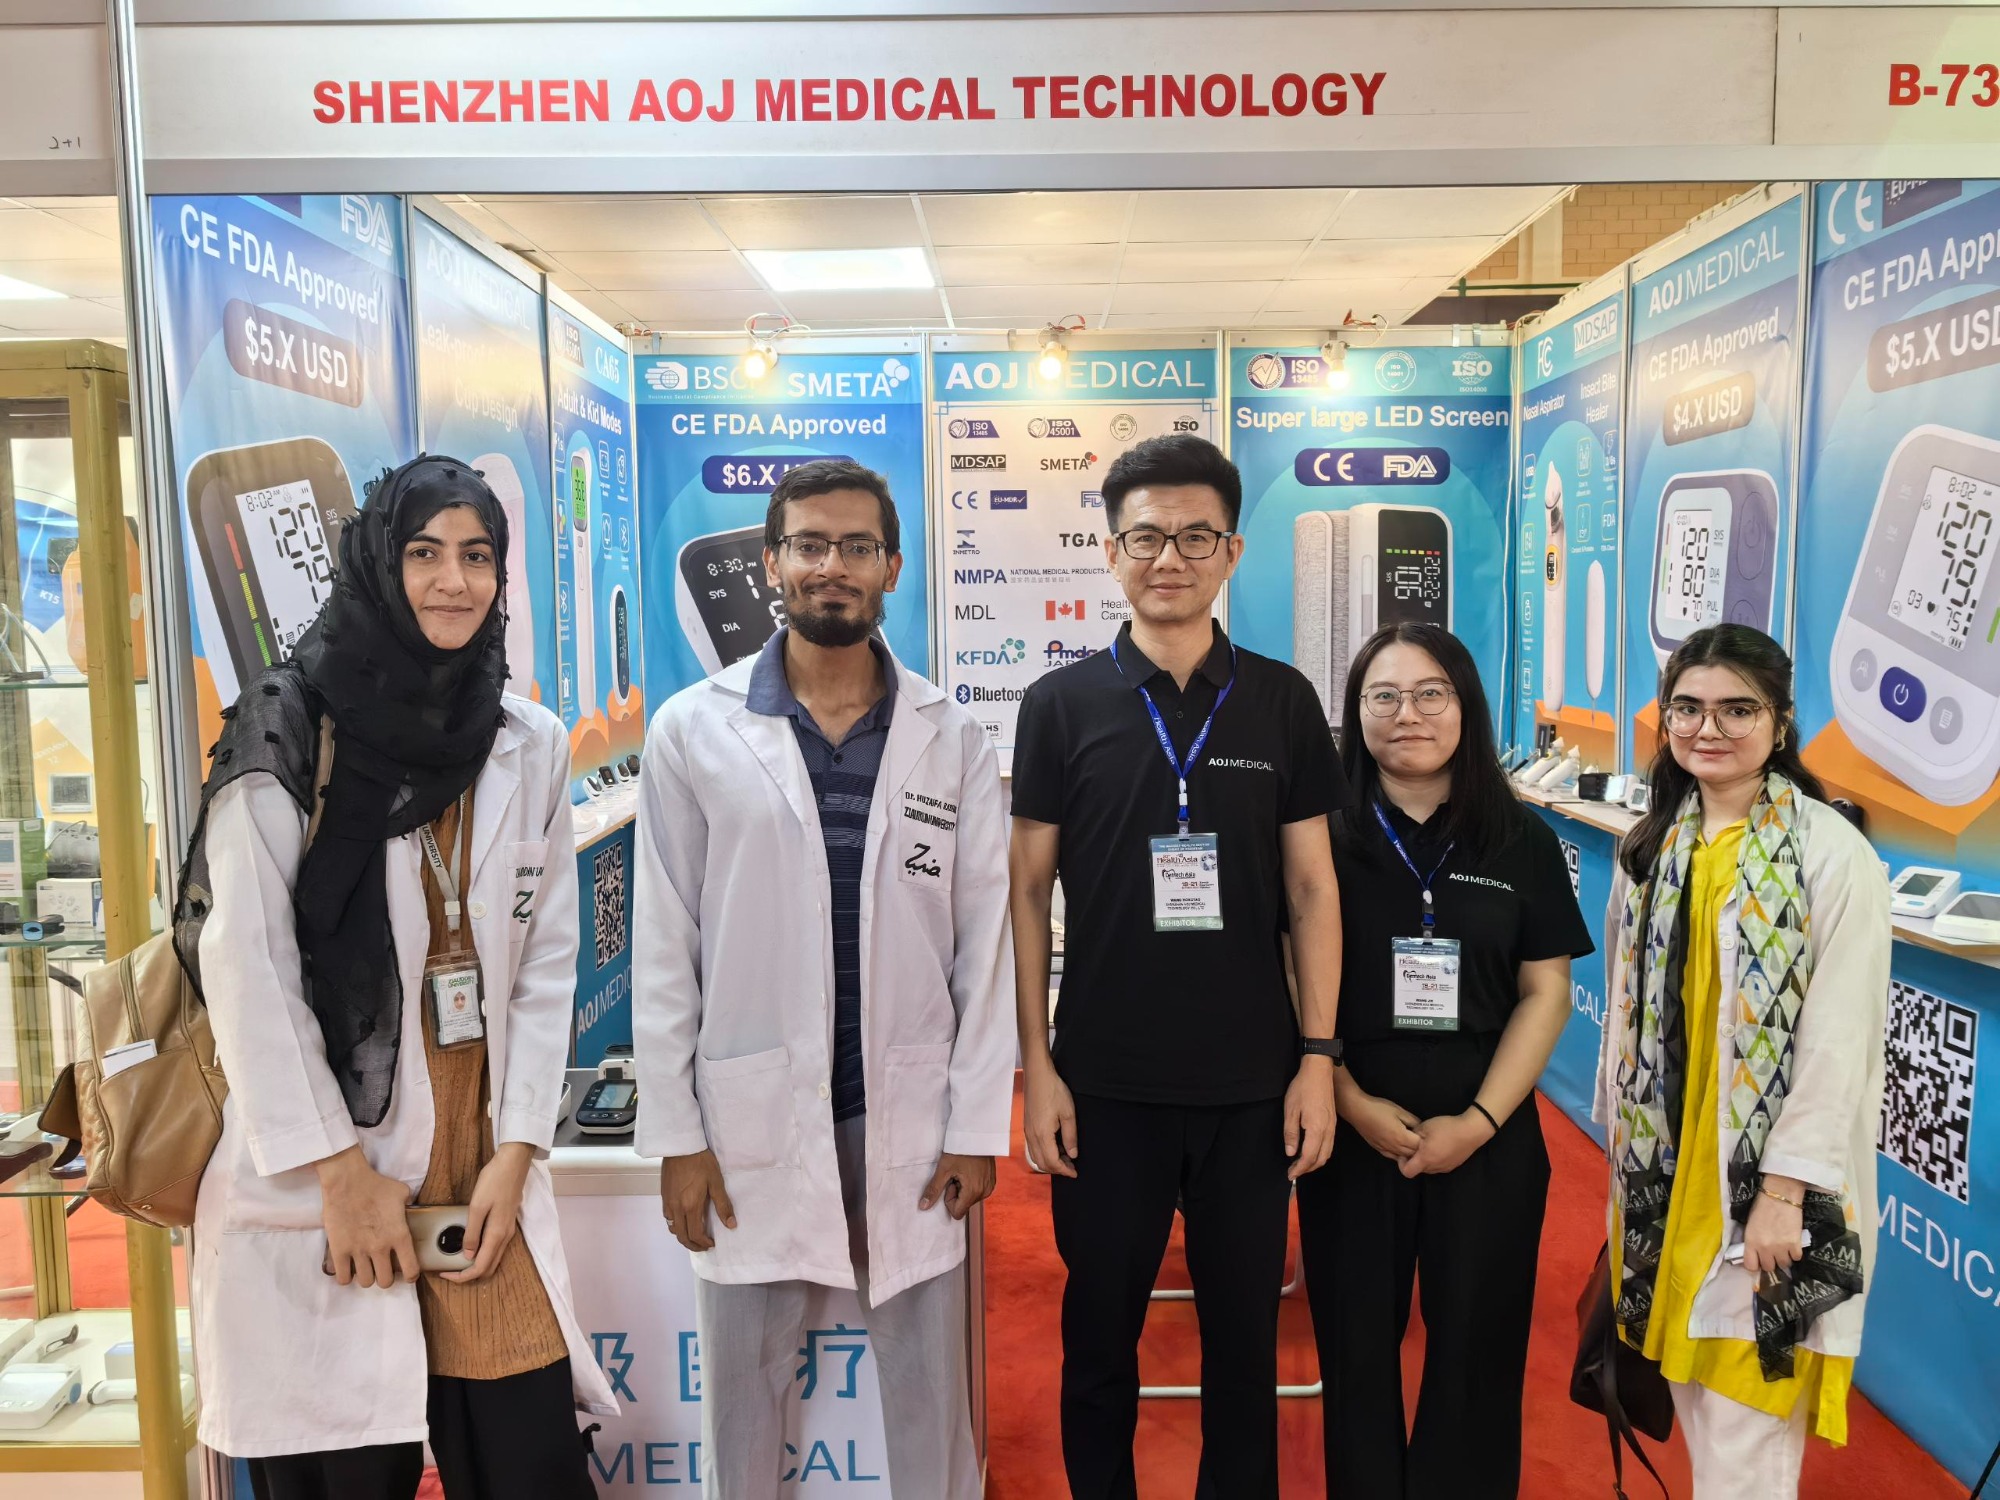 20th Health Asia exhibition has come to a successful conclusion